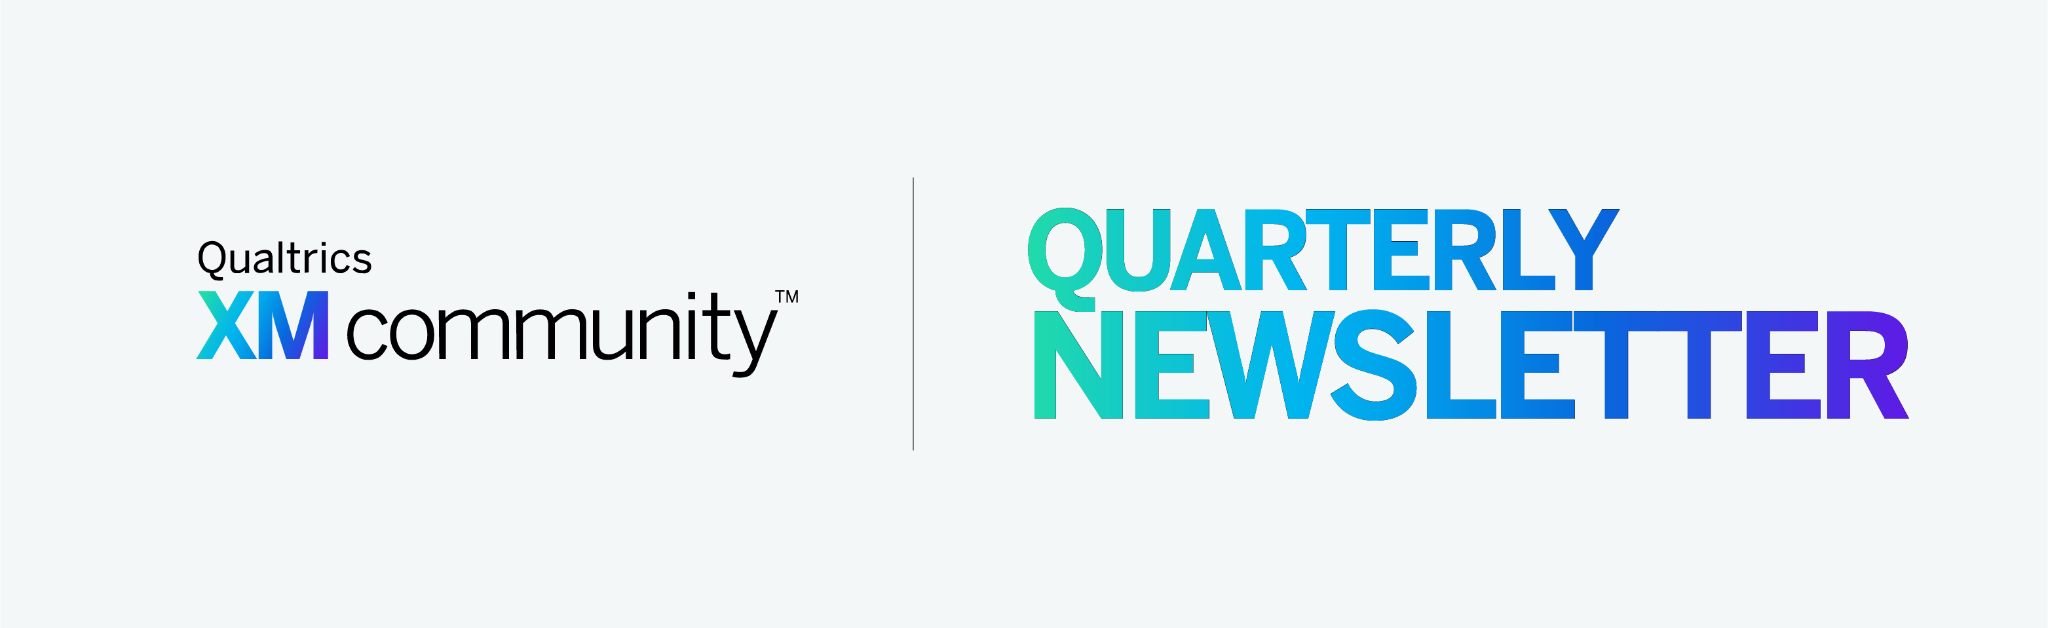 Qualtrics XM Community Quarterly Newsletter